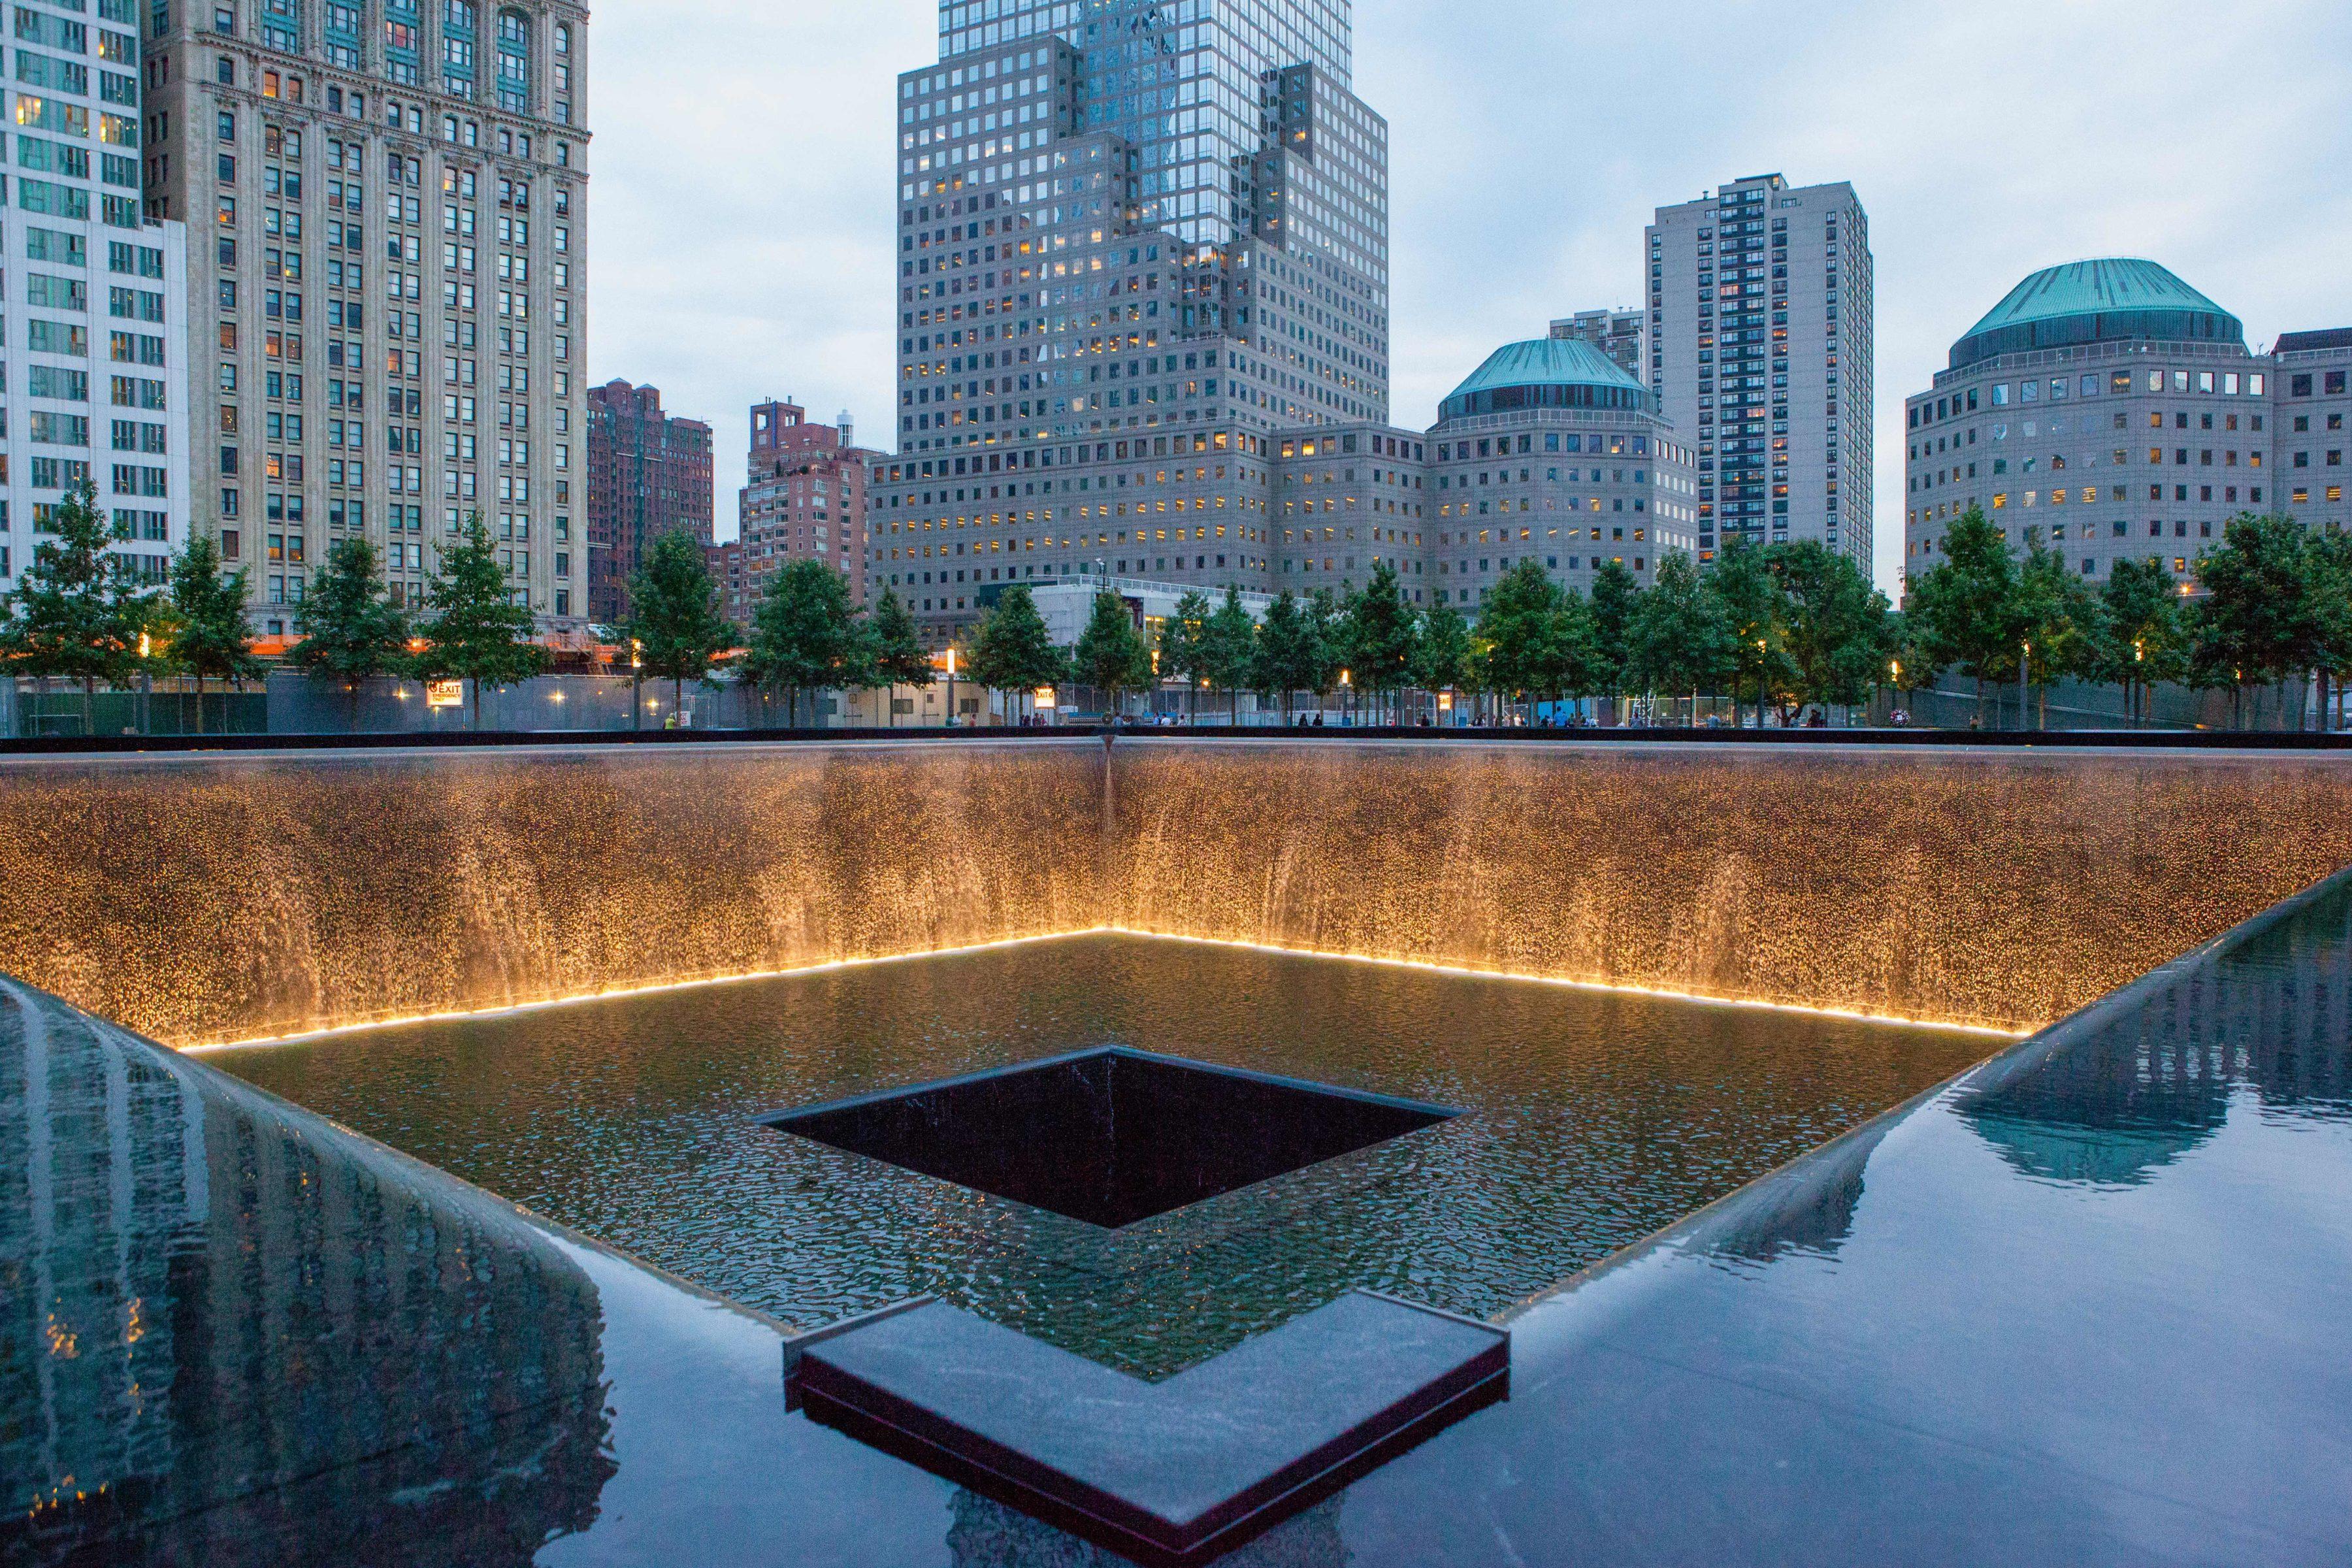 9/11 Memorial & Museum | Manhattan, NY 10007